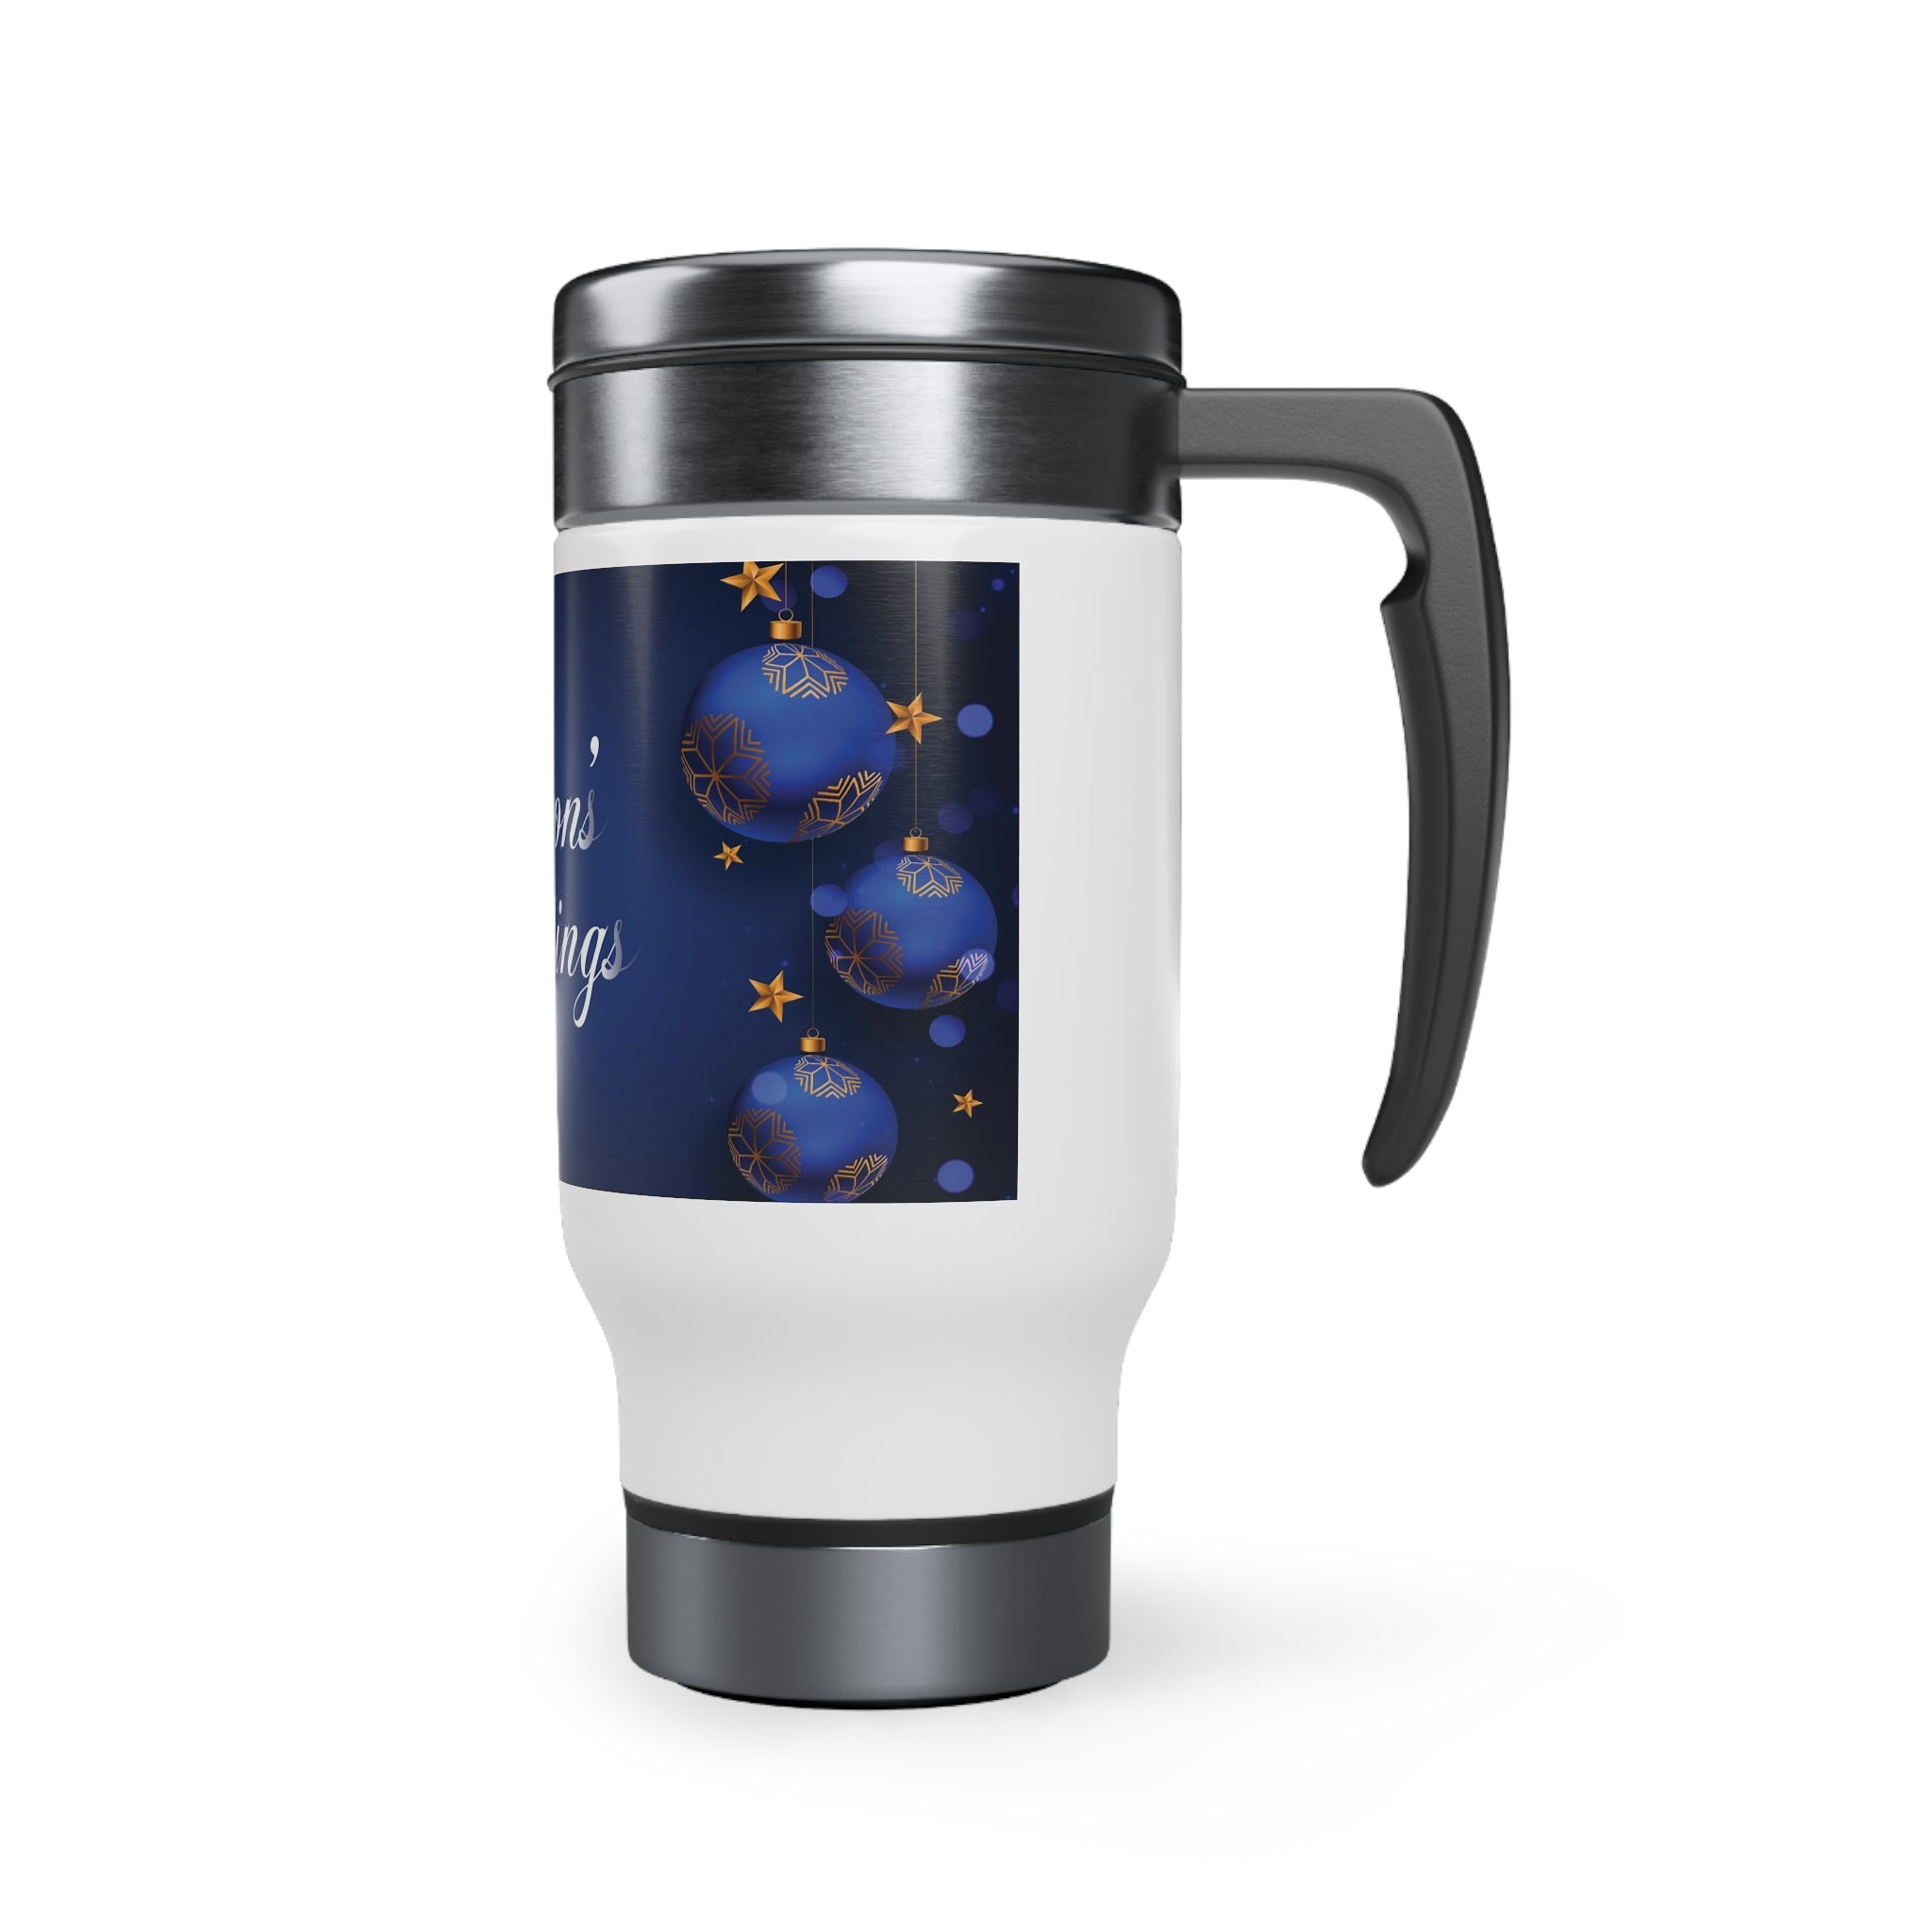 Christmas Stainless Steel Travel Mug with Handle, 14oz Dark Blue